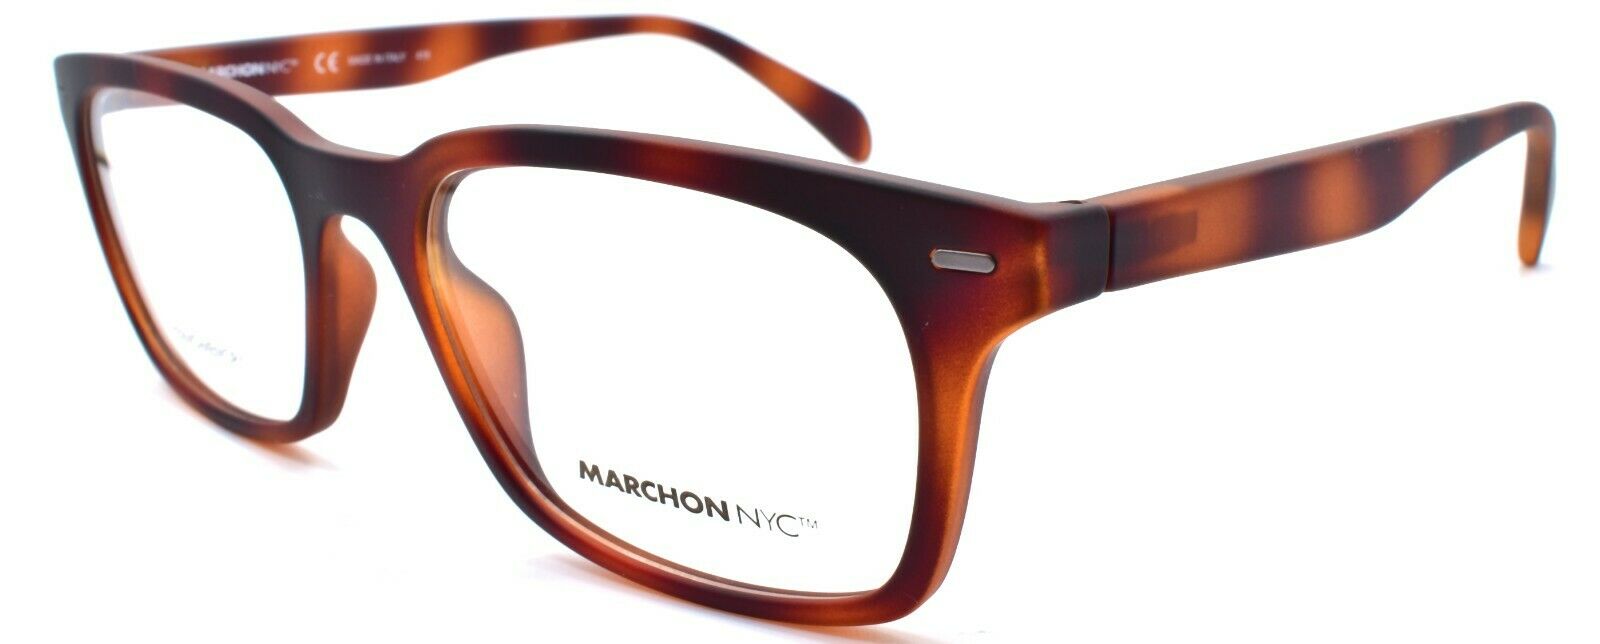 1-Marchon M-3801 215 Men's Eyeglasses Frames 54-18-140 Matte Tortoise-886895351898-IKSpecs